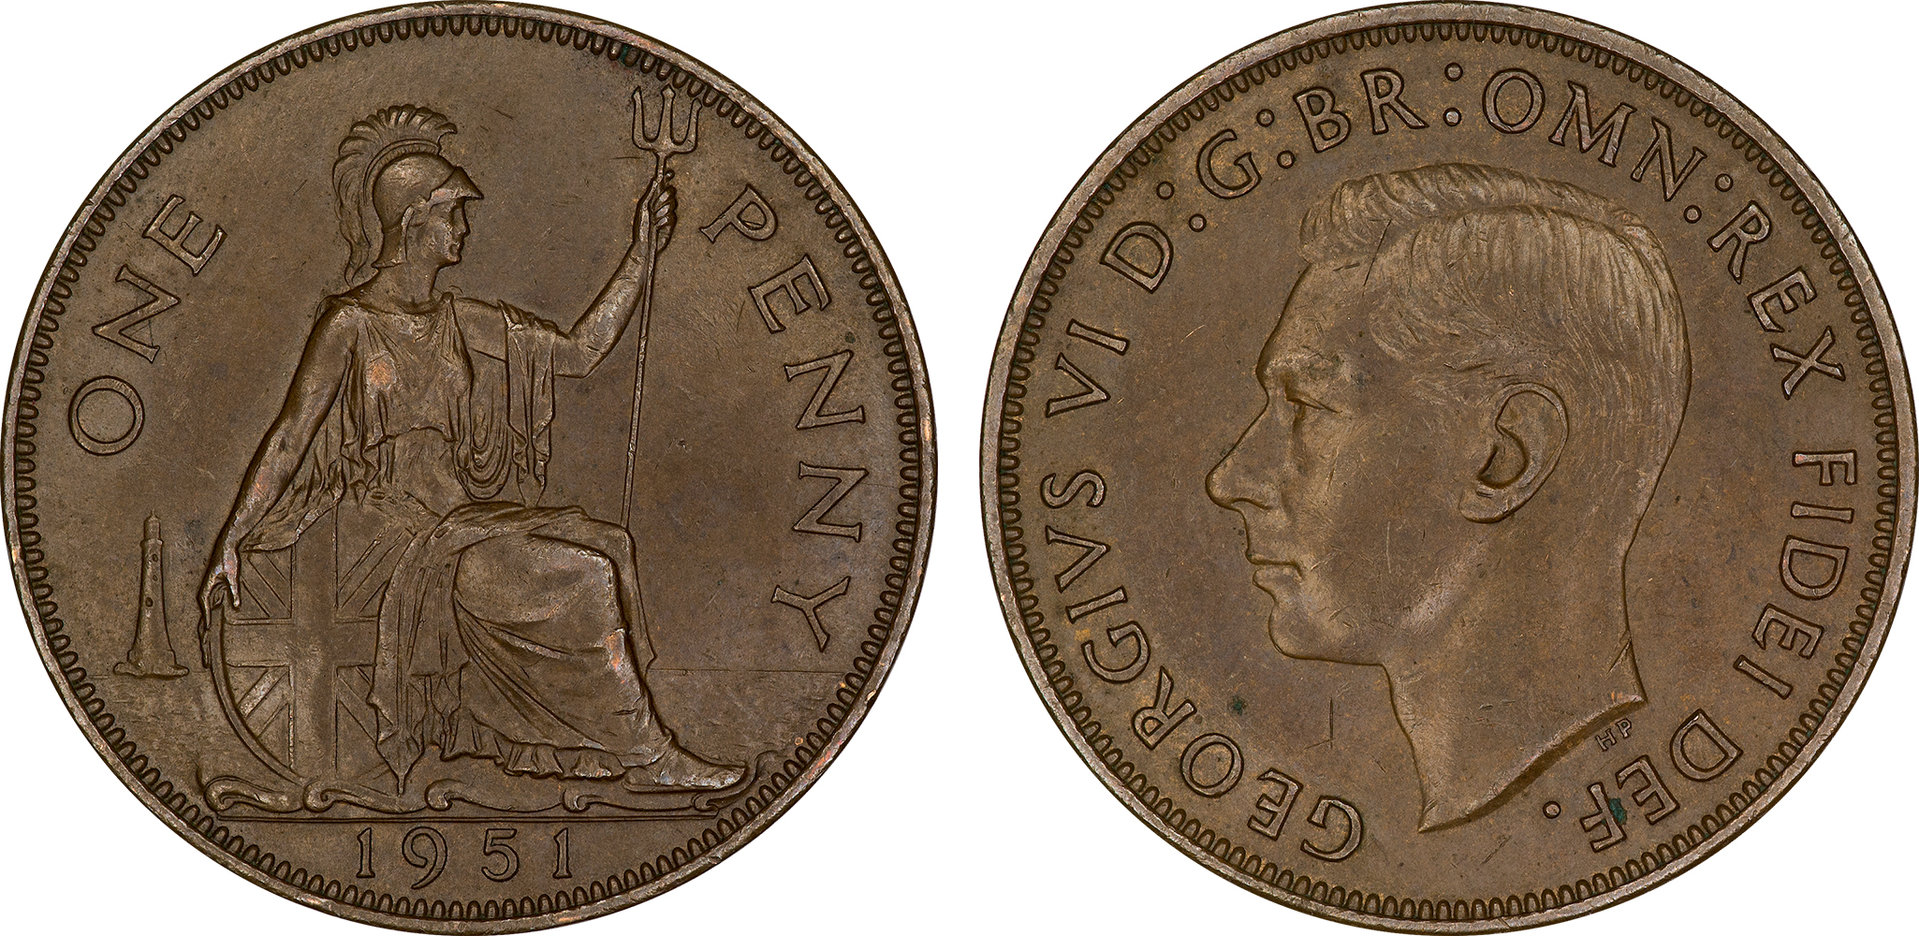 Great Britain - 1951 Penny.jpg